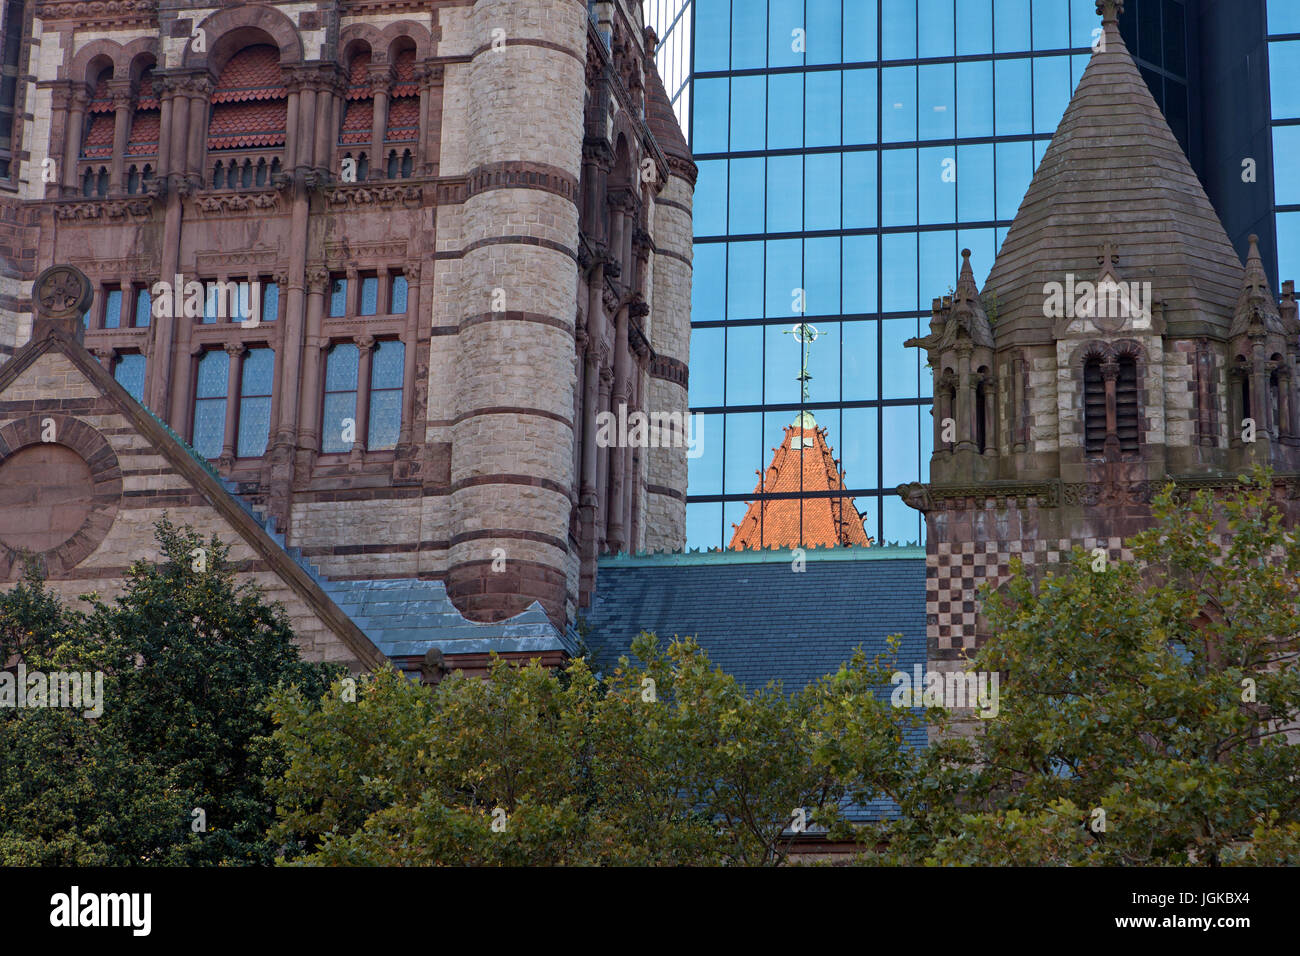 Reflexiones de una iglesia, Boston, MA., EE.UU. Foto de stock